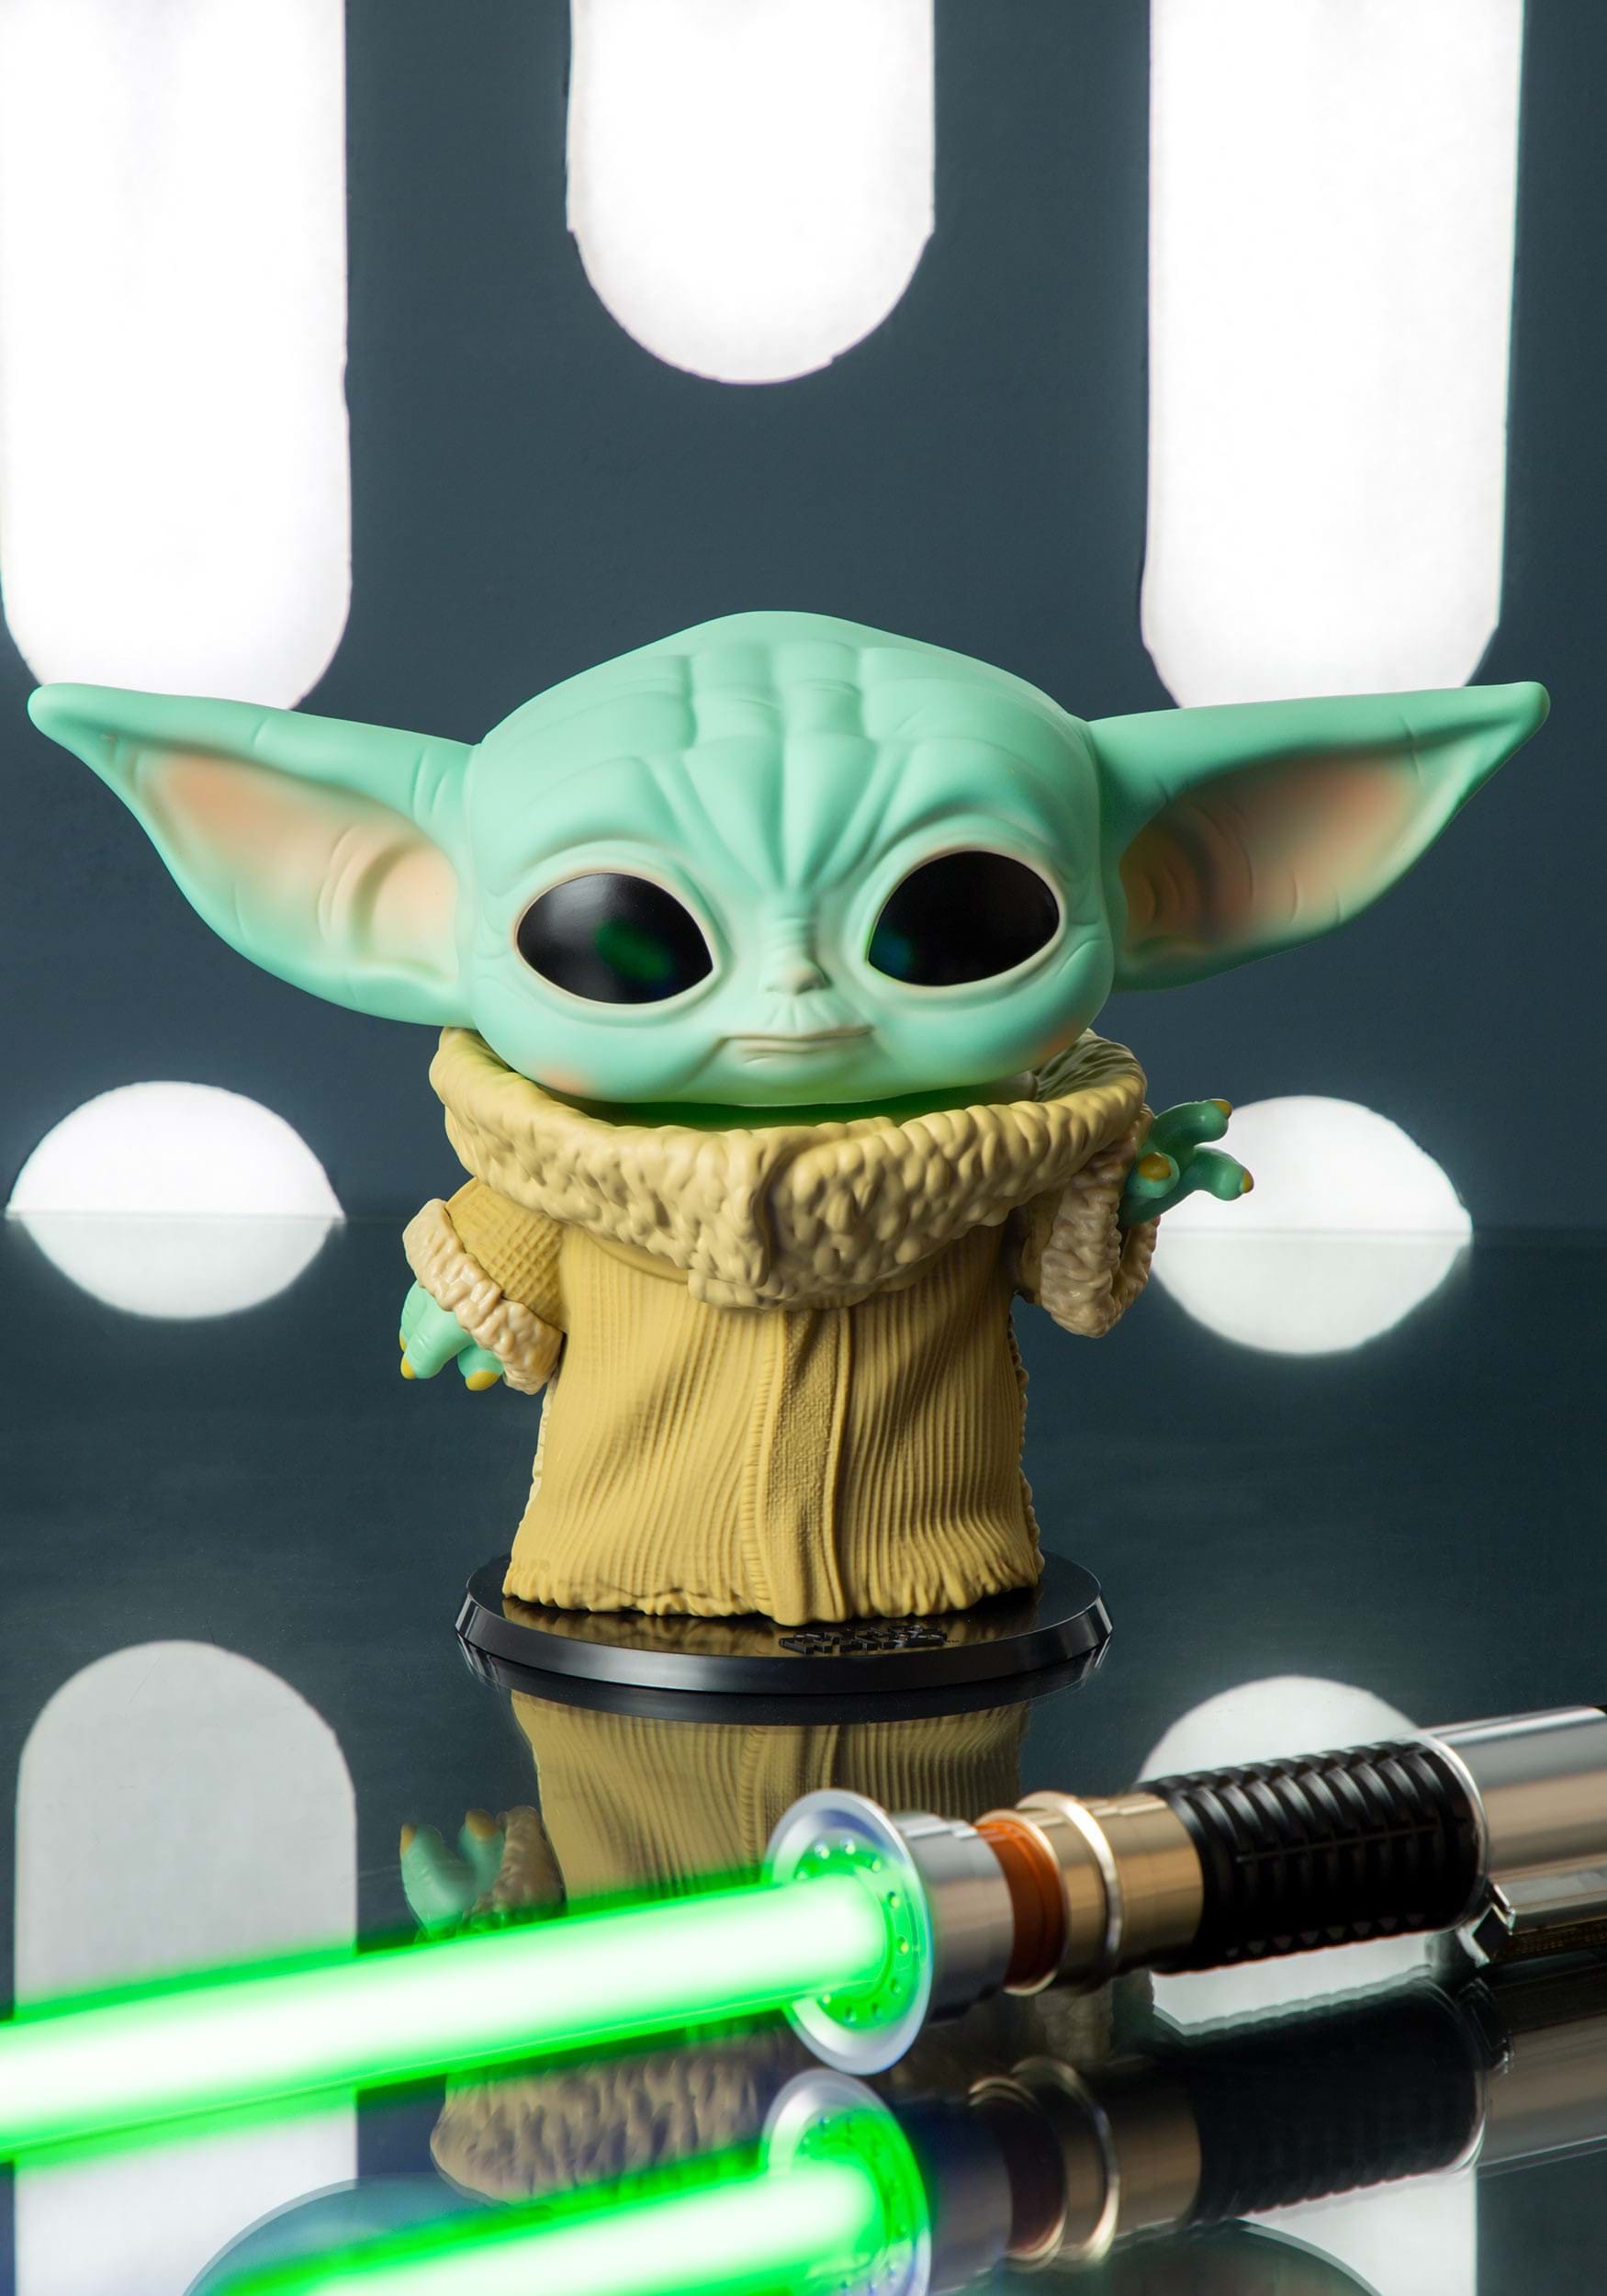 Funko Pop! Star Wars - Baby Yoda Mandalorian